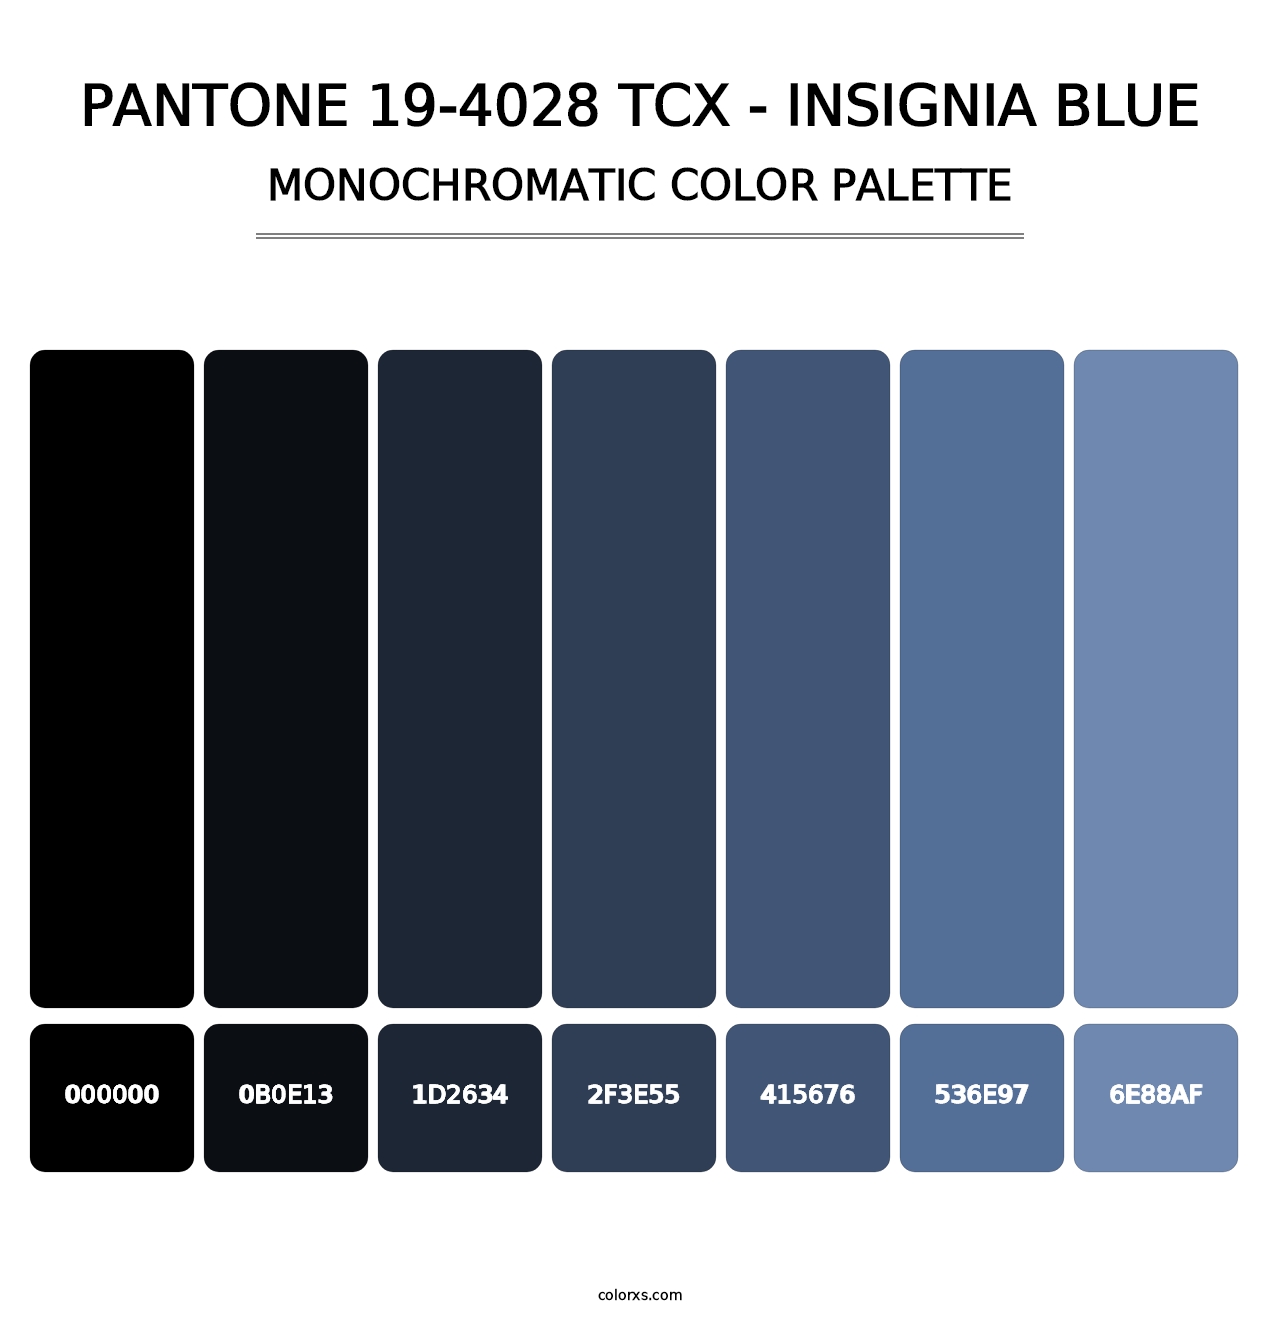 PANTONE 19-4028 TCX - Insignia Blue - Monochromatic Color Palette